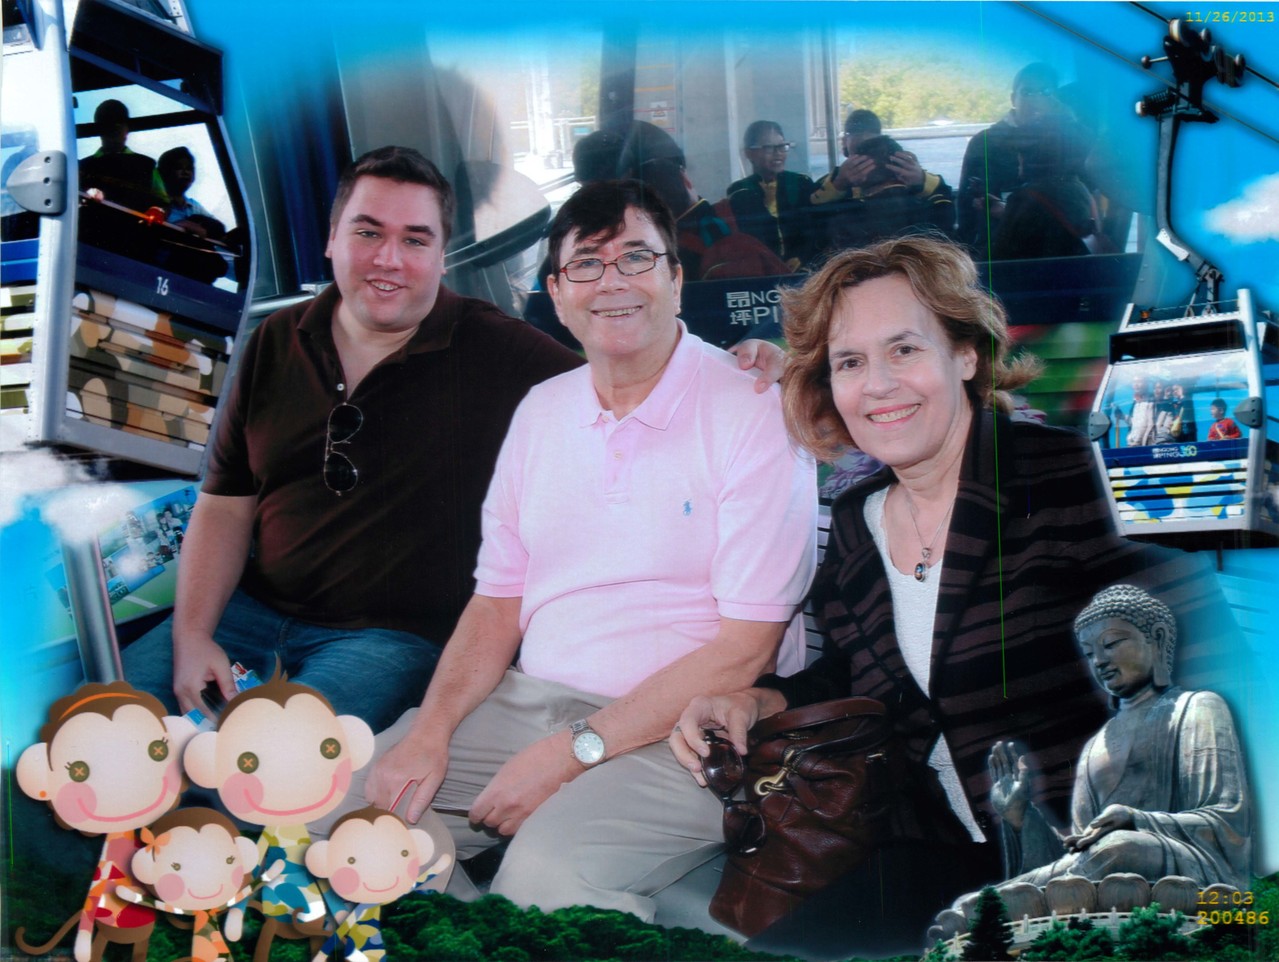 Greg, John & Lorraine take the cable car to the Big Buddha at Ngong Ping, Lantau Island, in Hong Kong.